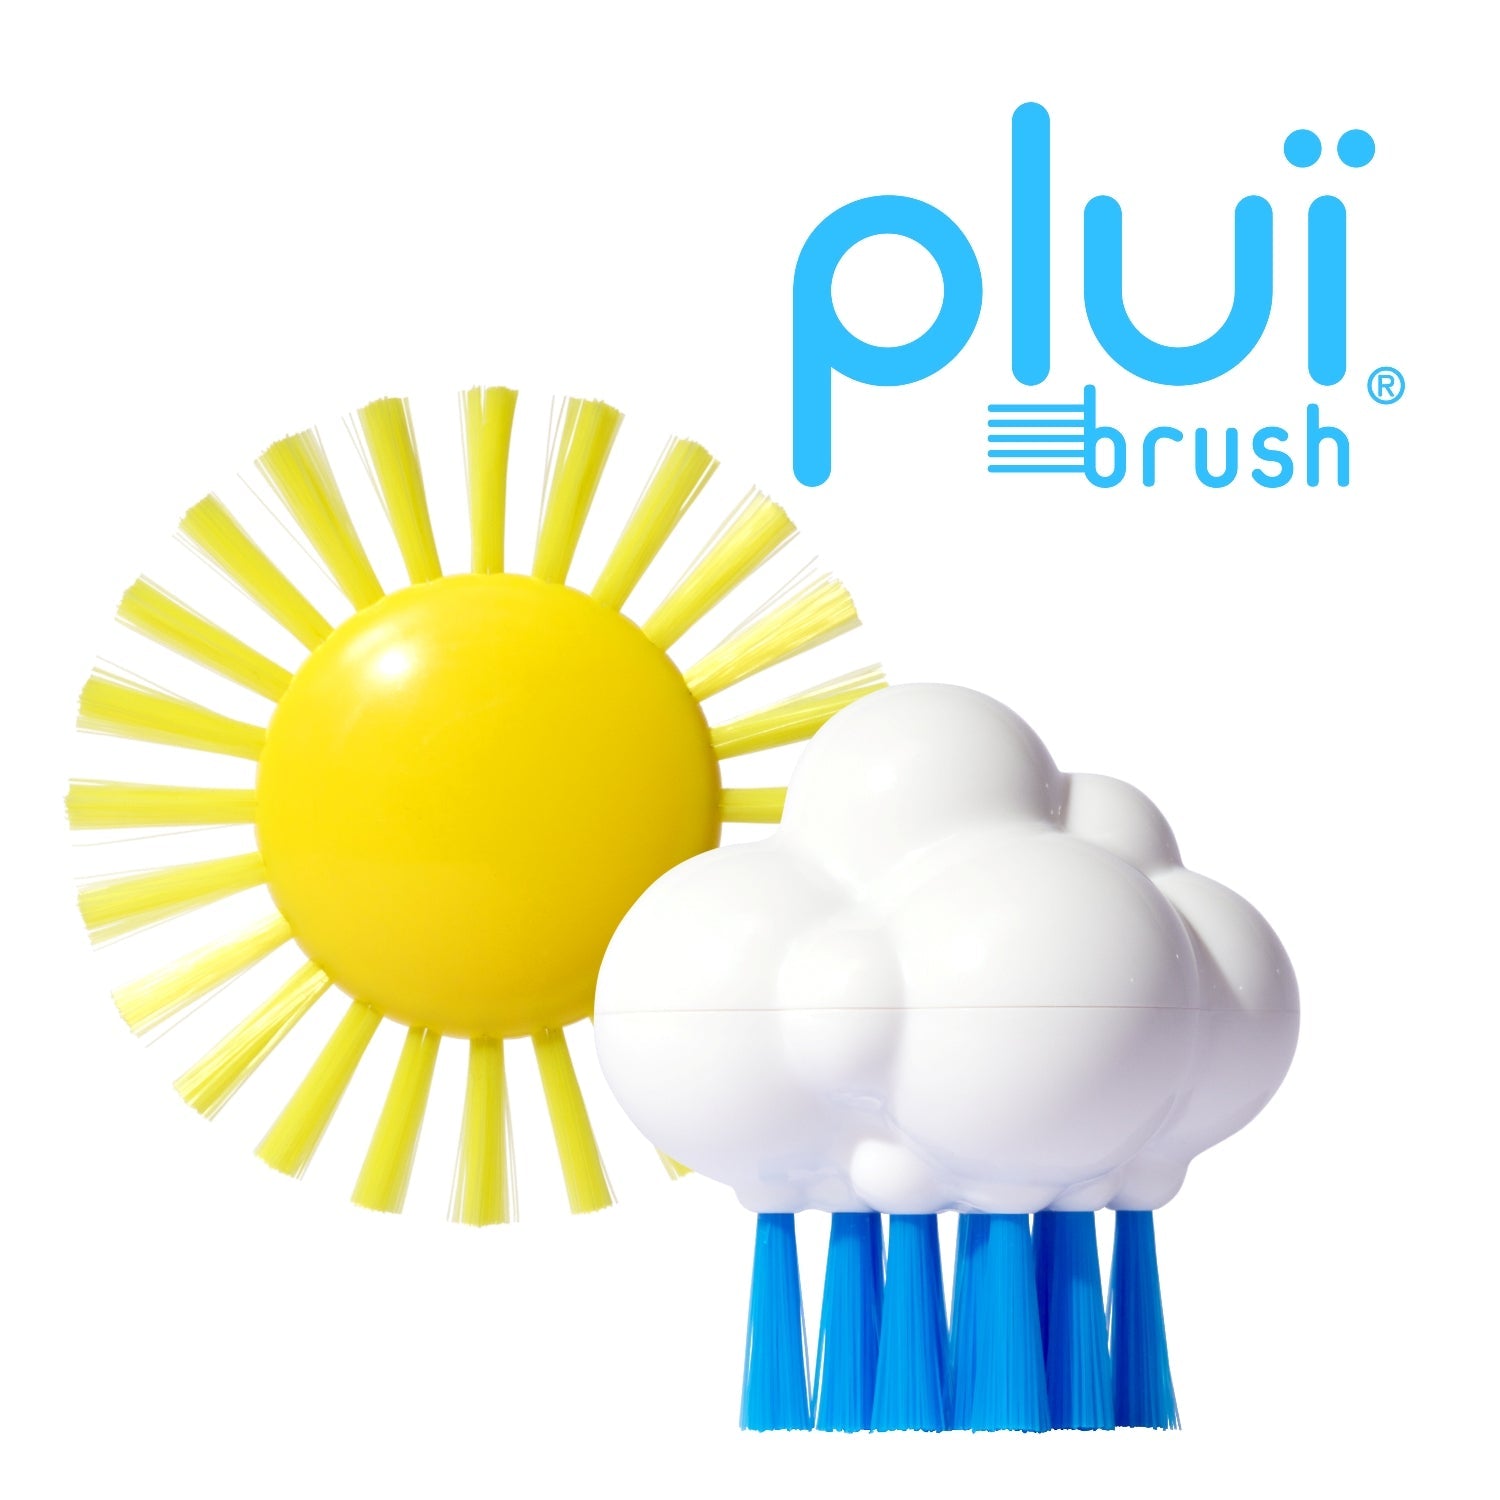 Plui Brush Cloudy - Moluk